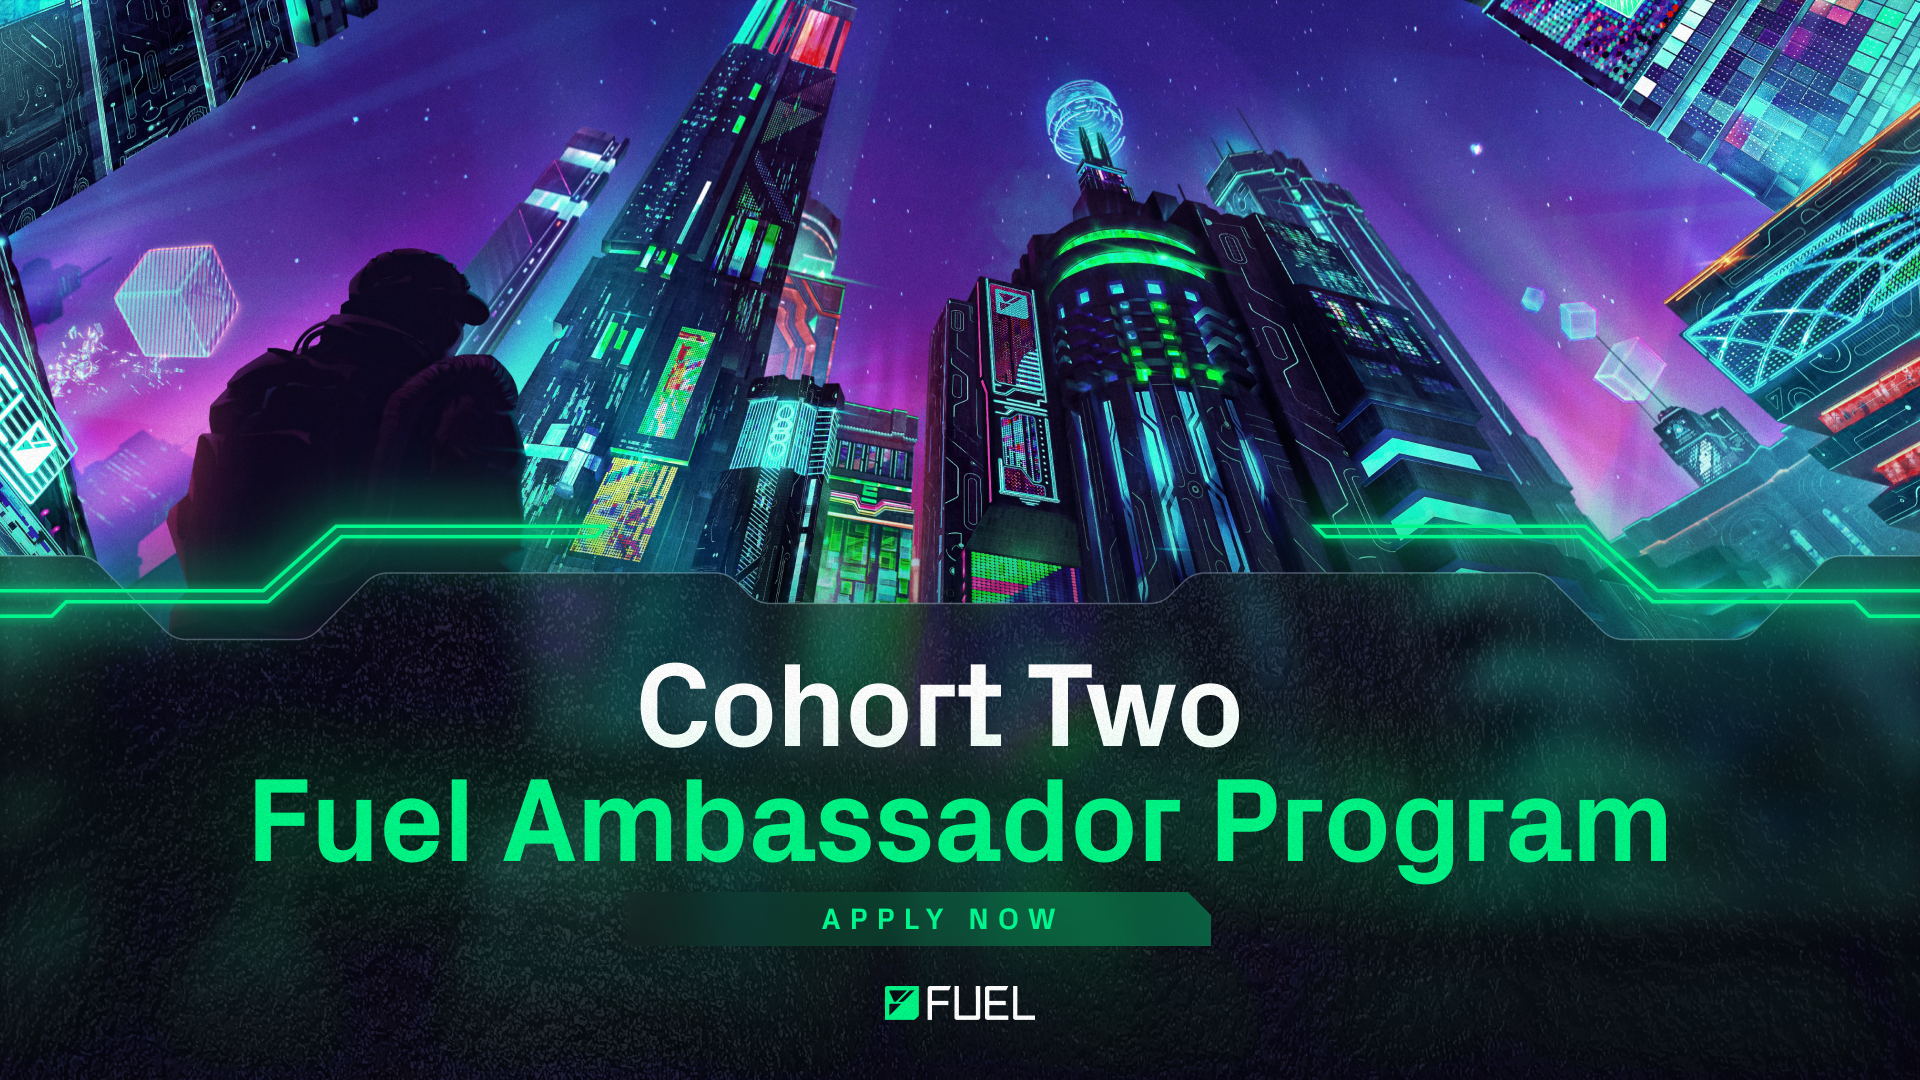 Introducing The Second Cohort Of The Fuel Ambassador Program